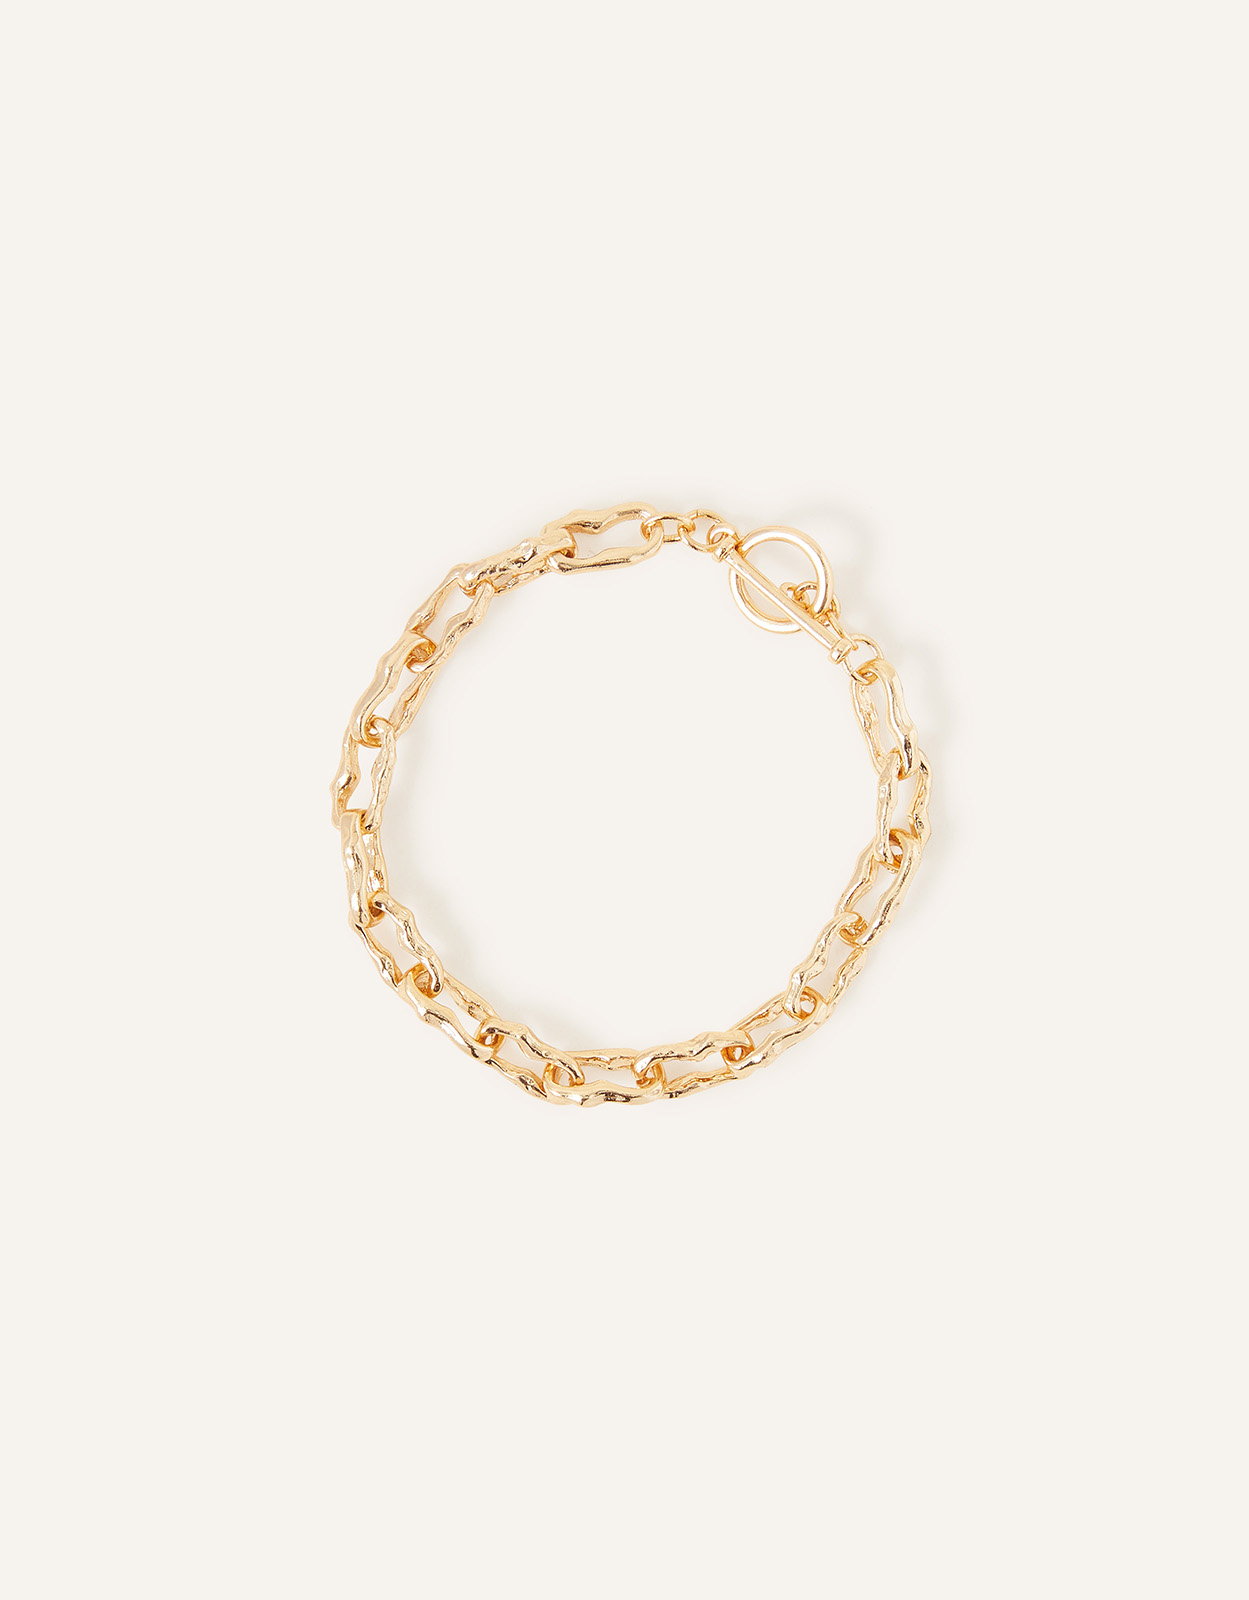 Accessorize Women's 14ct Gold-Plated Molten Link Bracelet